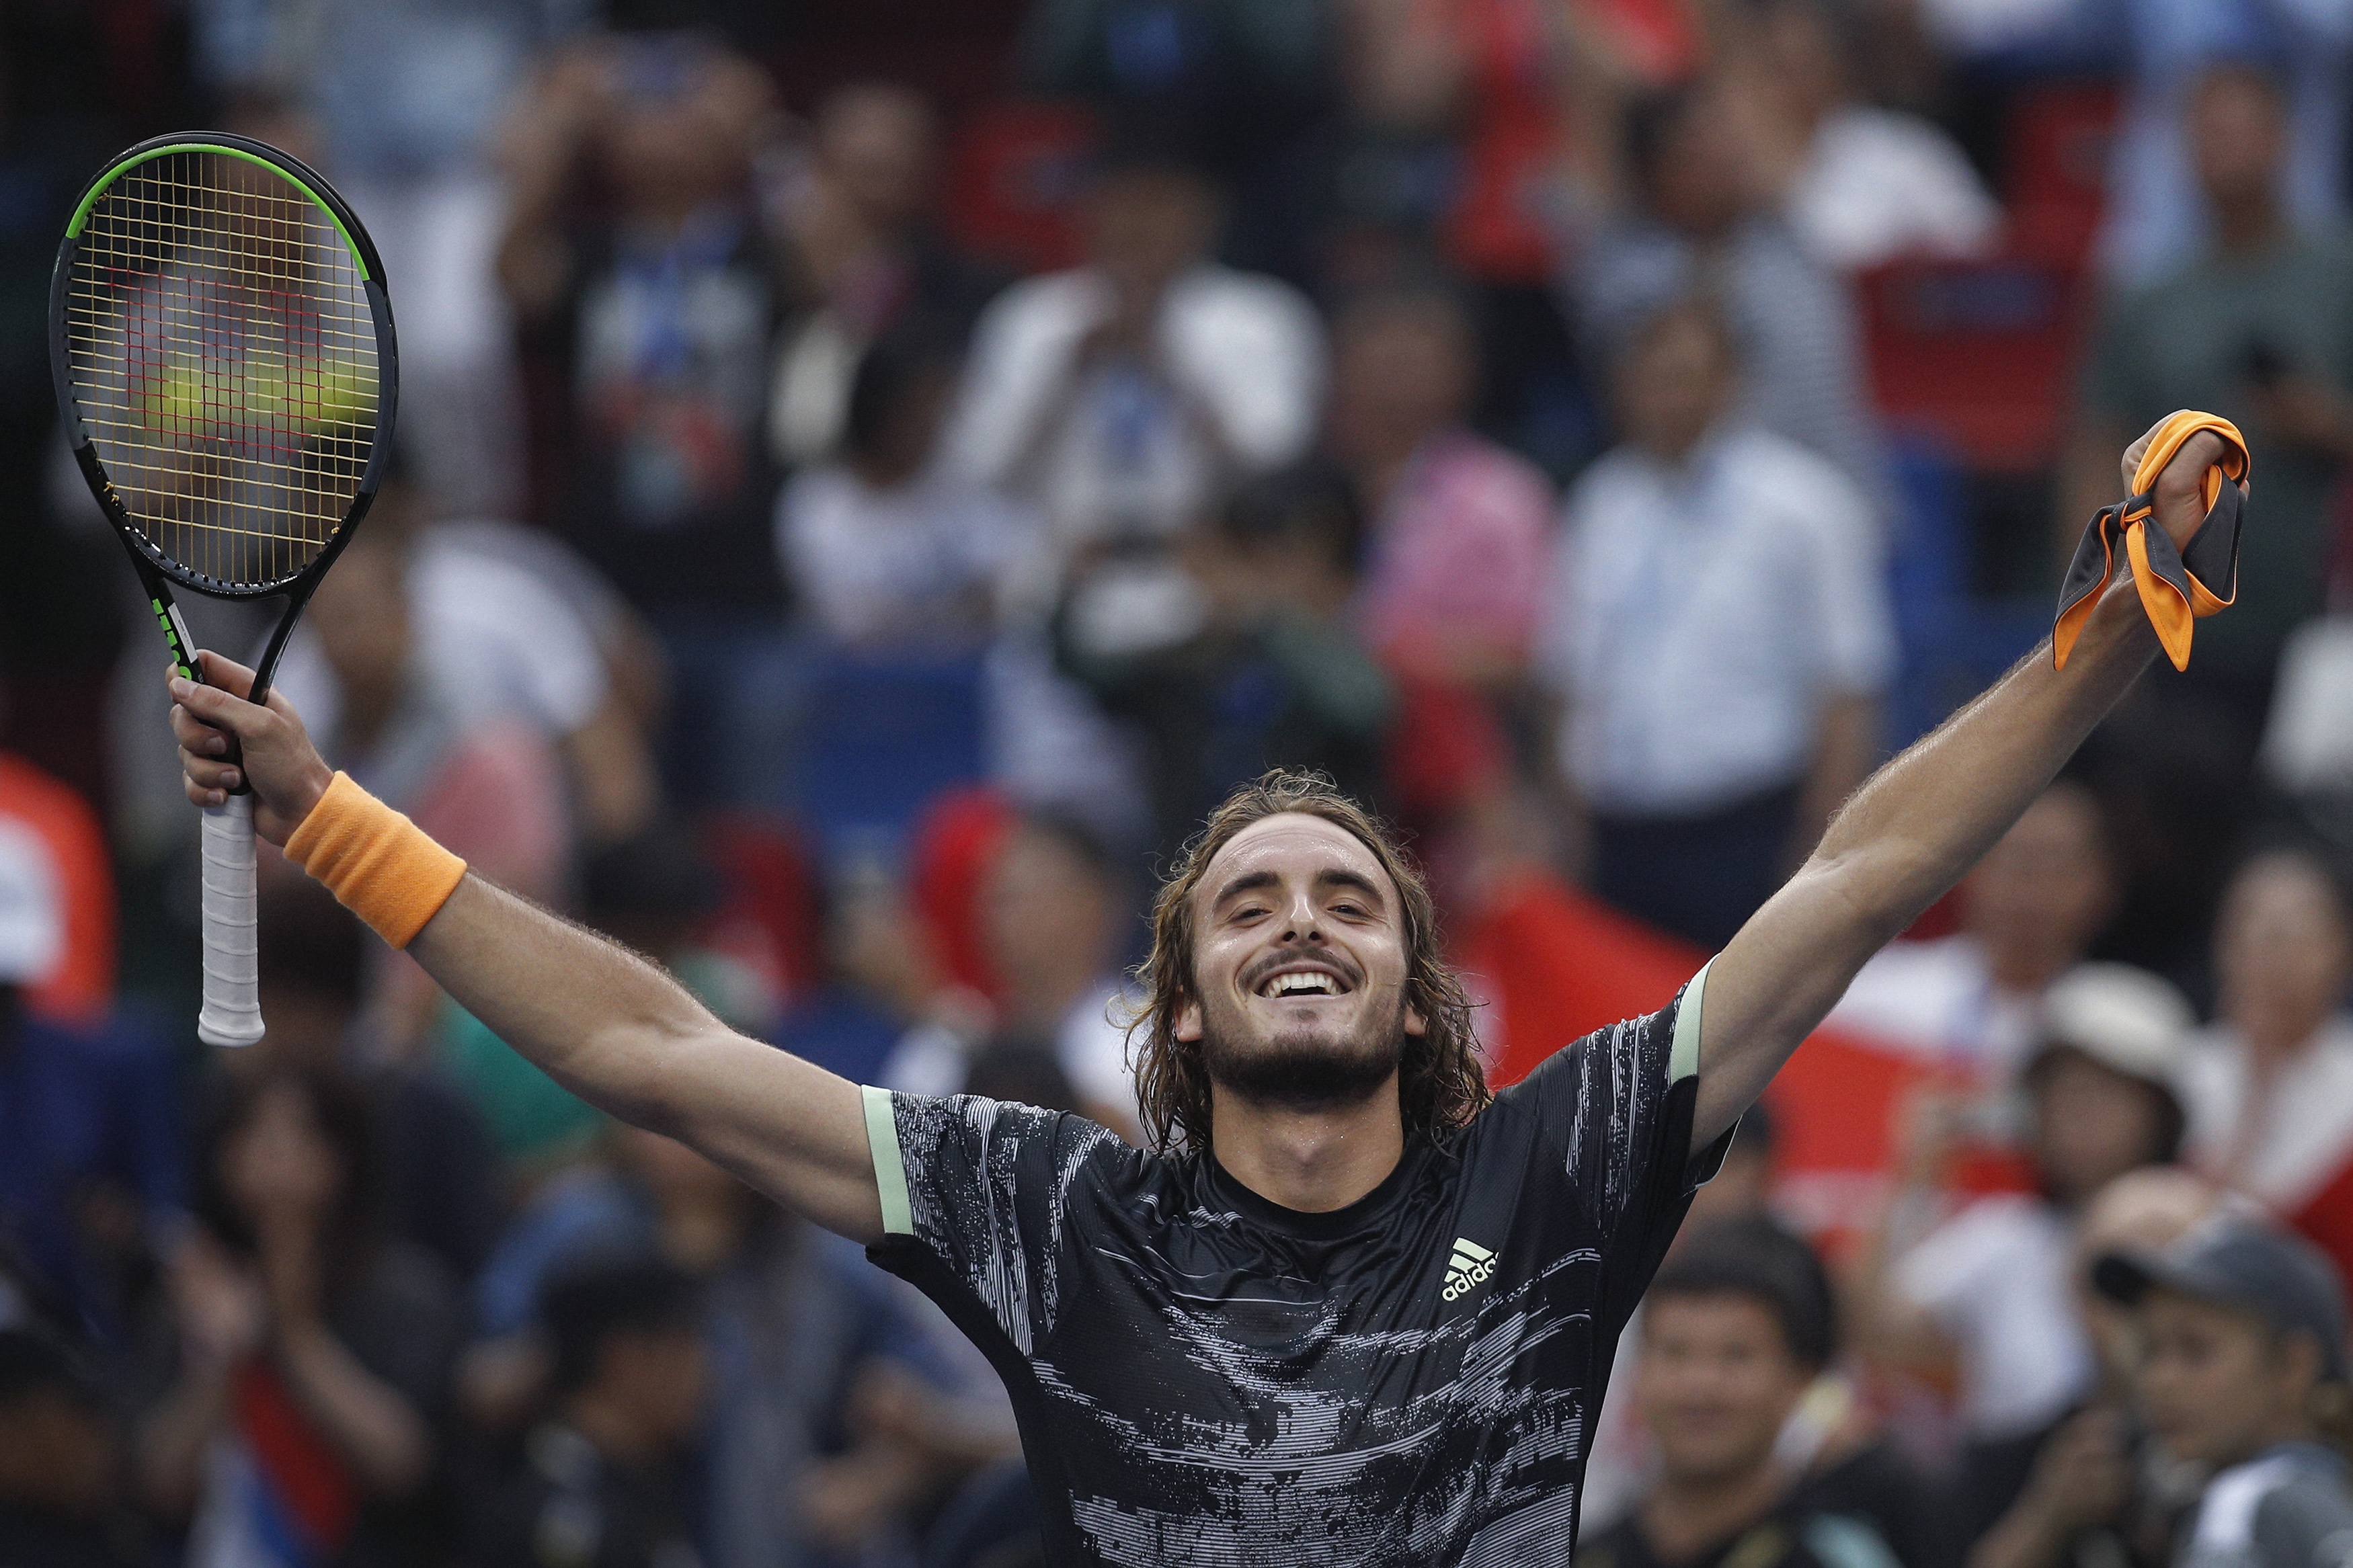 Roger Federer to play Stefanos Tsitsipas in Dubai final, Tennis News